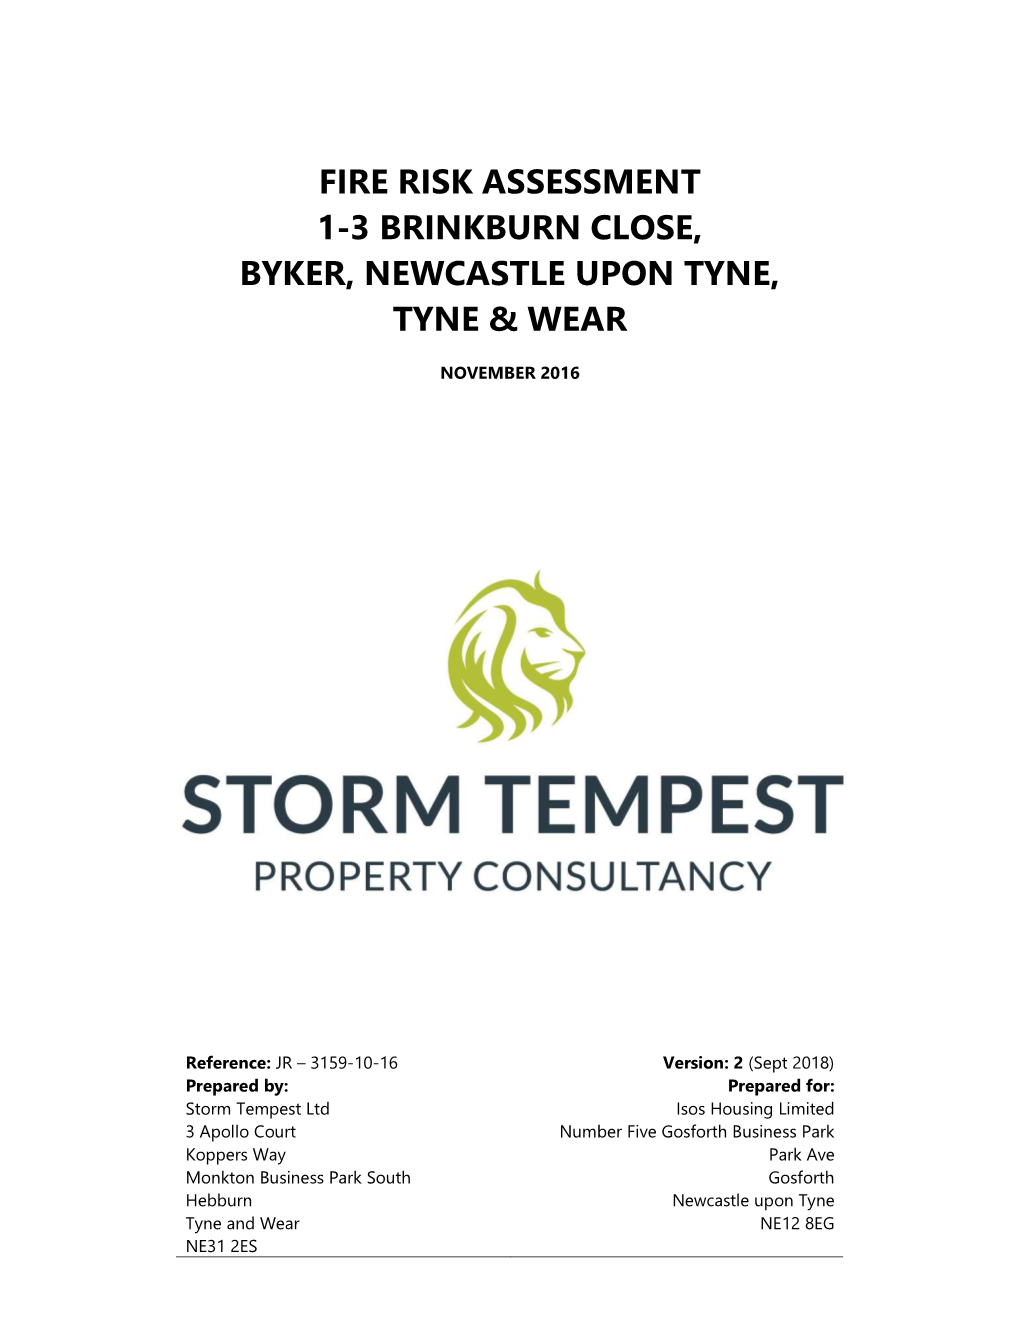 Fire Risk Assessment 1-3 Brinkburn Close, Byker, Newcastle Upon Tyne, Tyne & Wear